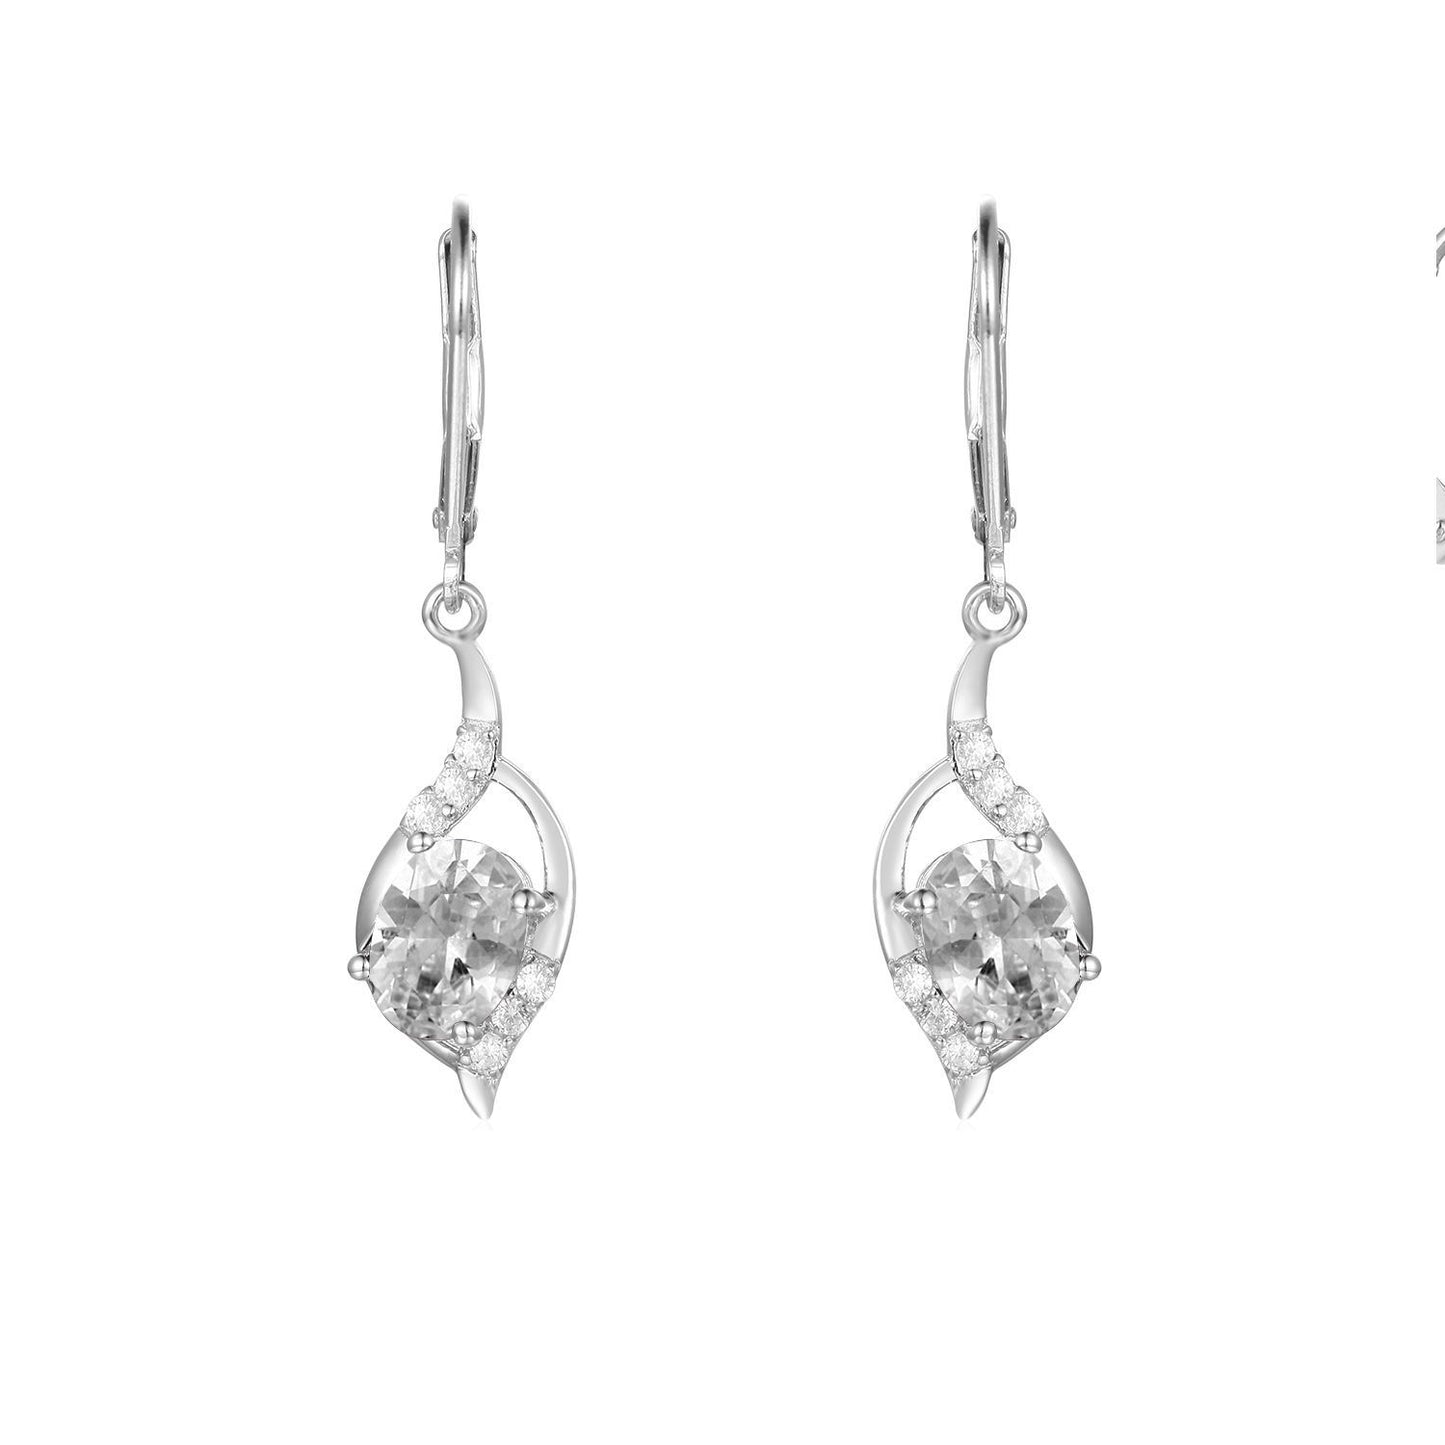 Creative Water Droplet Oval Natural Gemstone Silver Drop Earrings